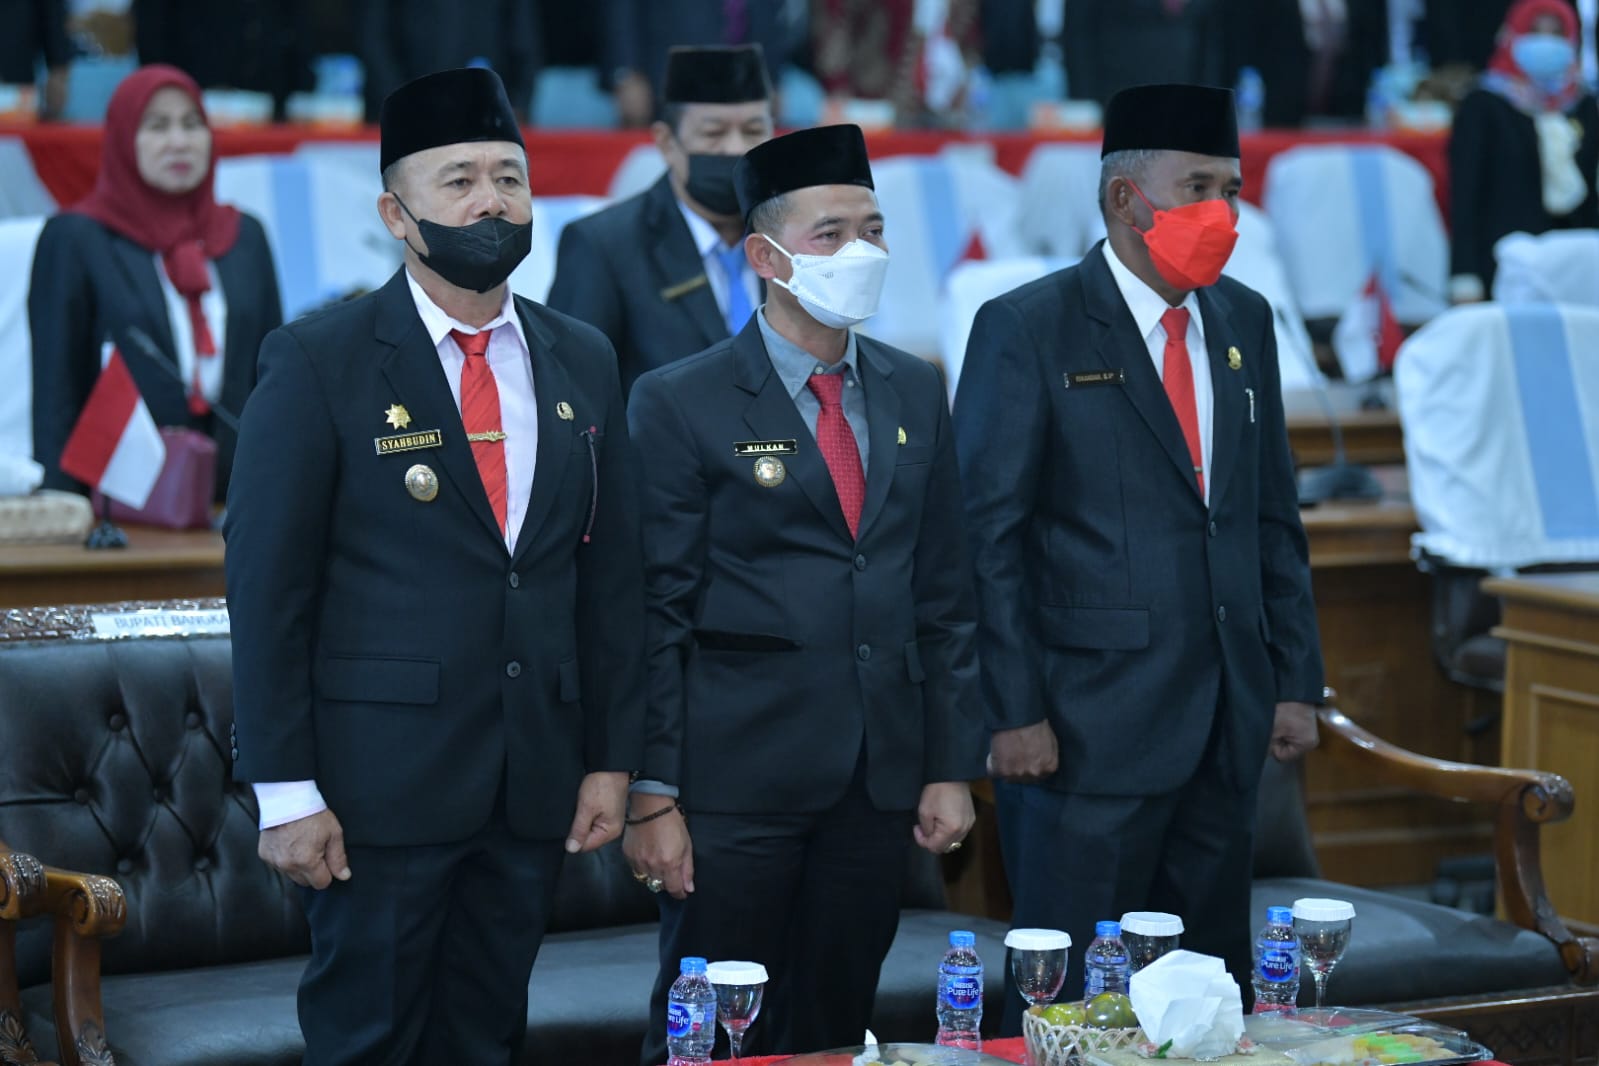 Bupati Mulkan Bangga Pakaian Adat Babel Dikenakan Presiden Jokowi 